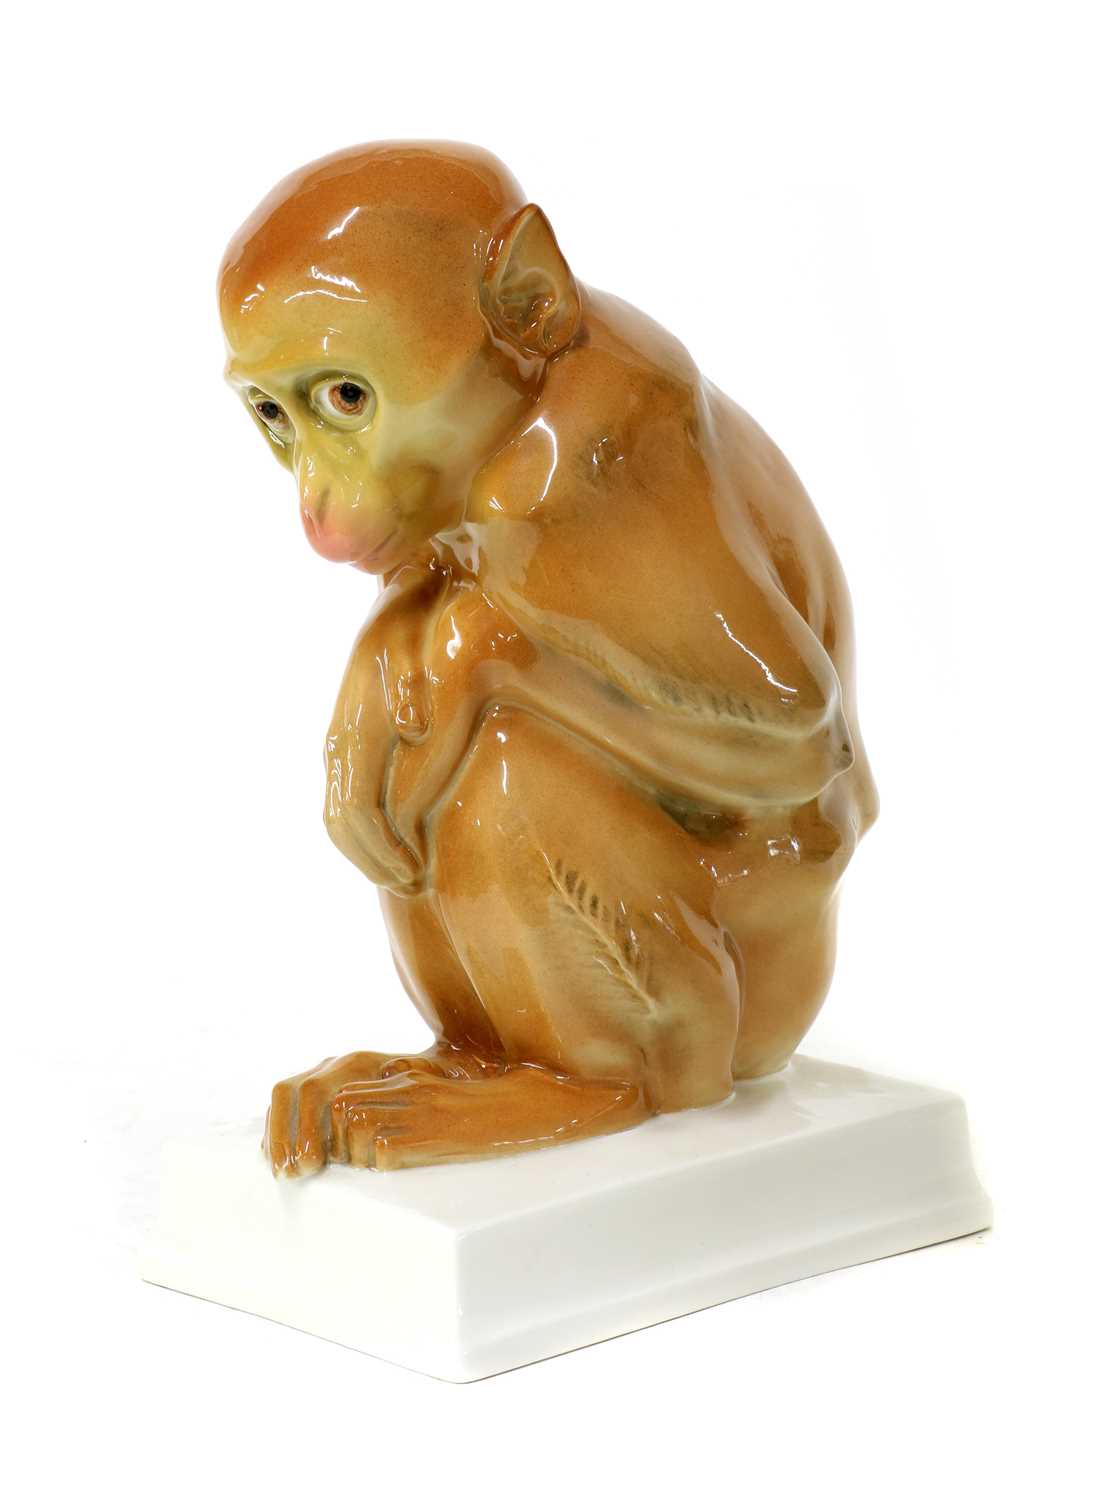 Lot 104 - A porcelain figure of a monkey